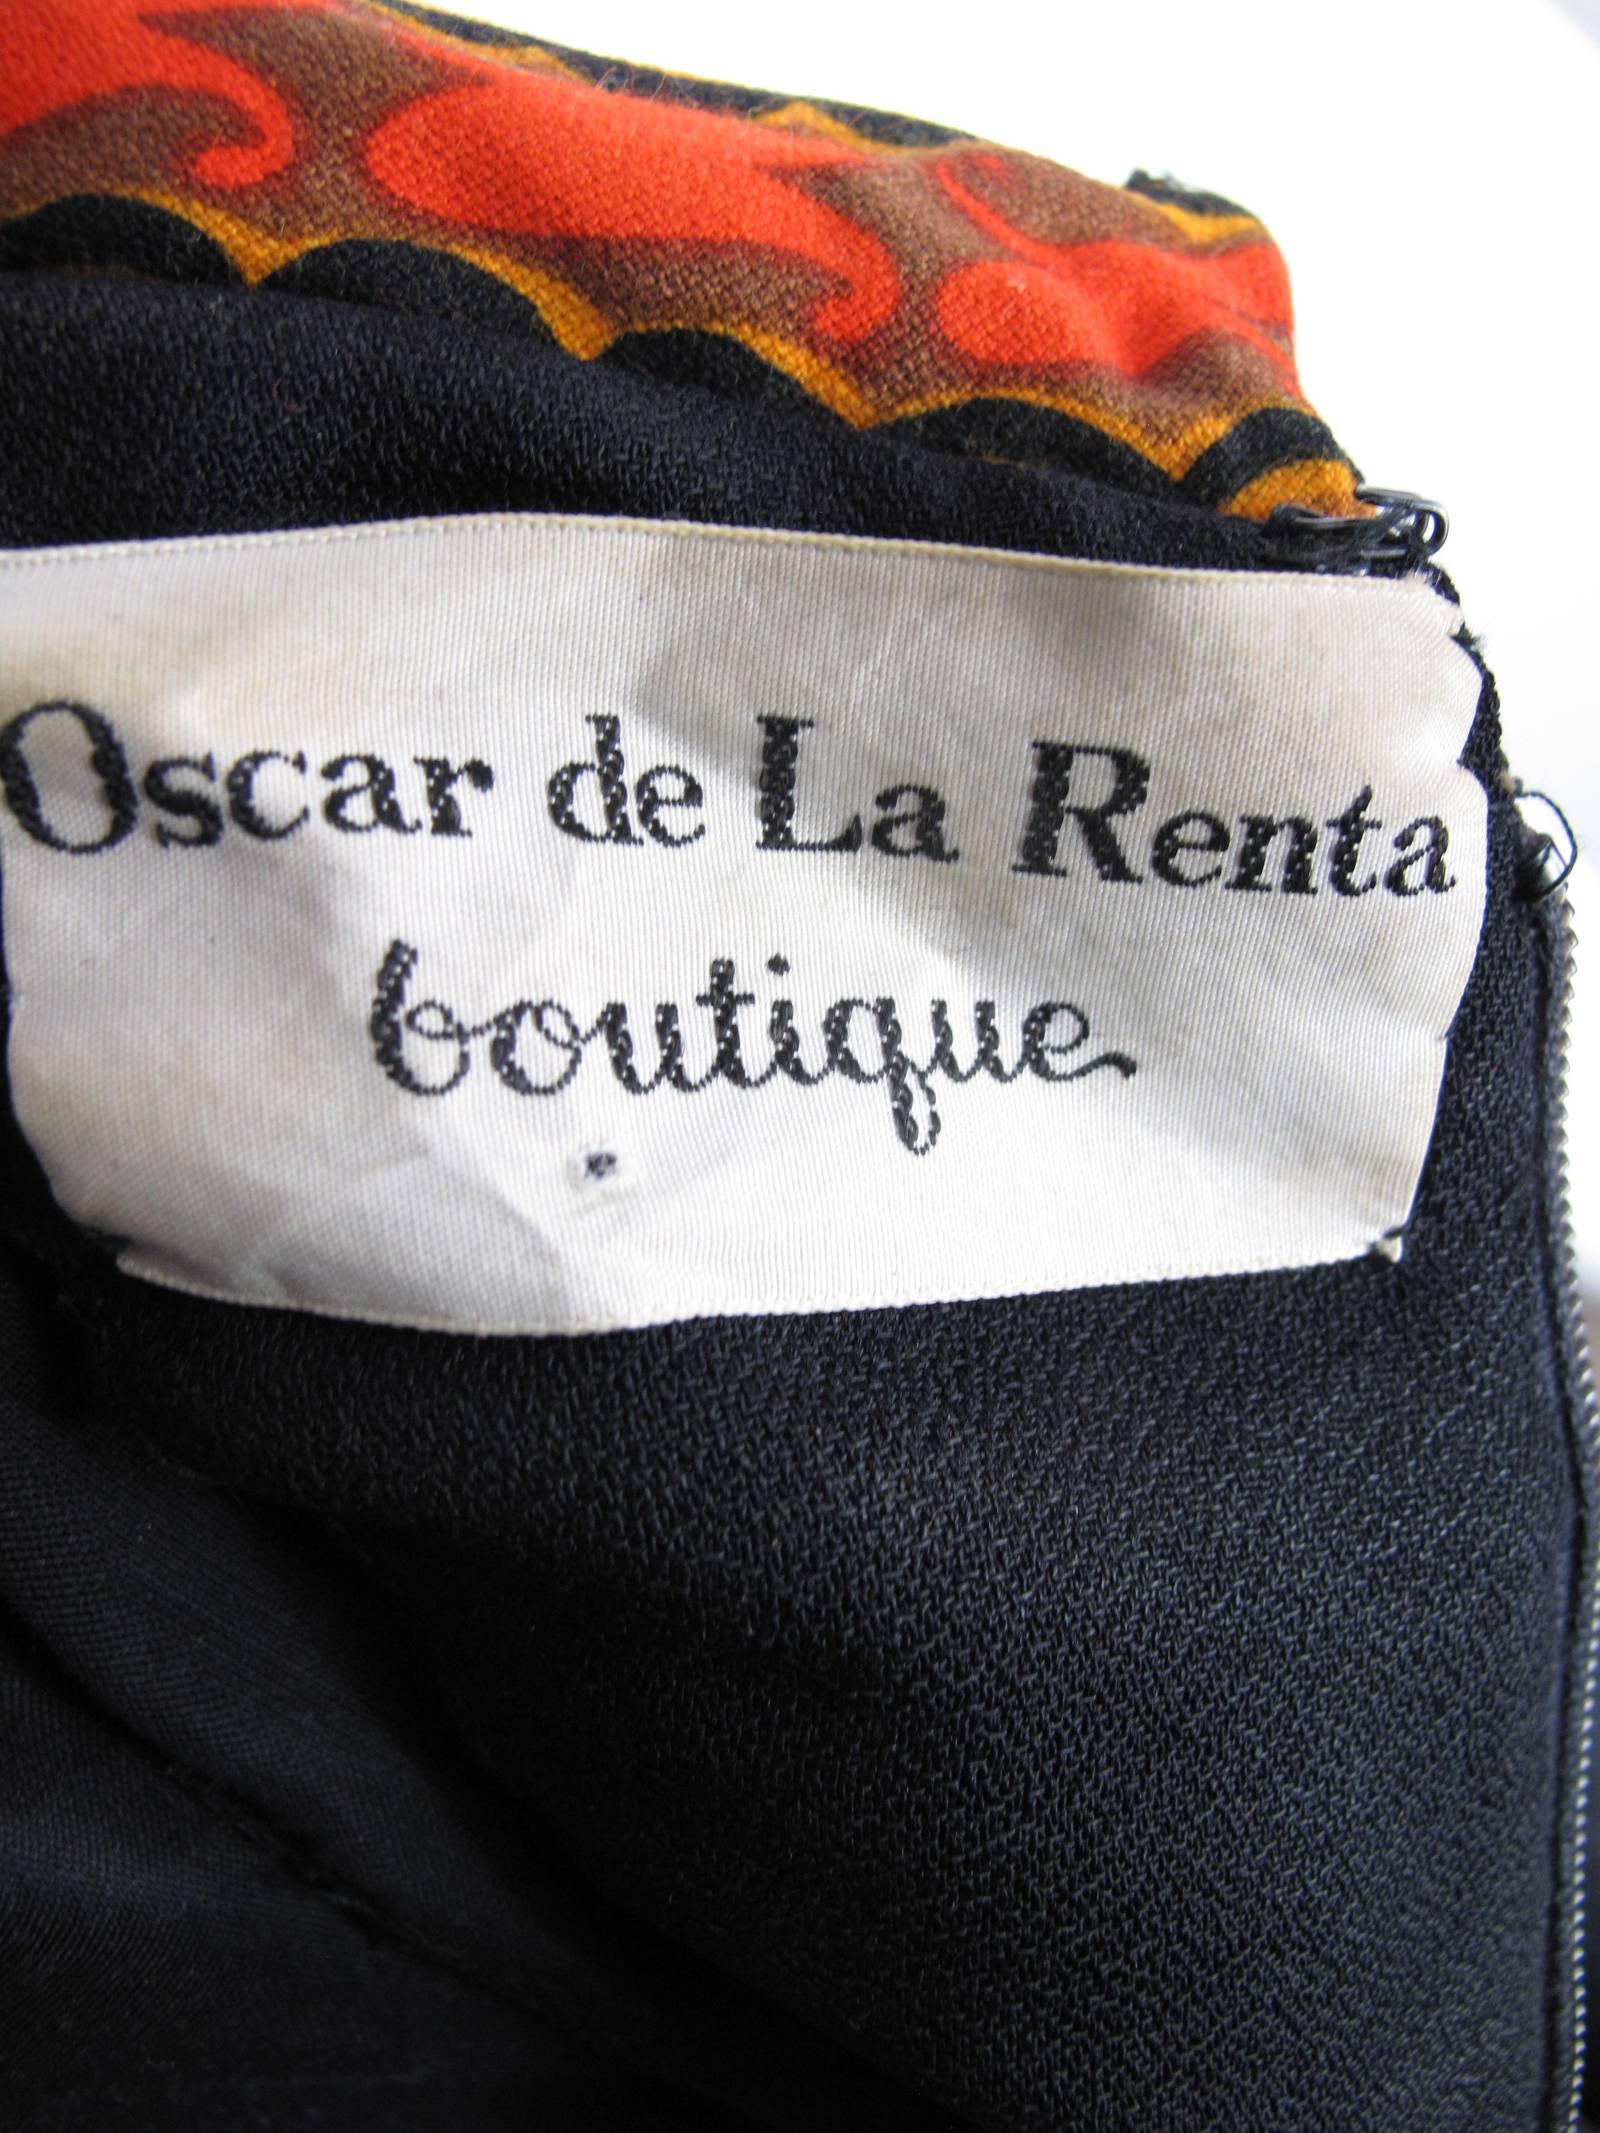 Women's 1960s Oscar de la Renta Crepe Dress